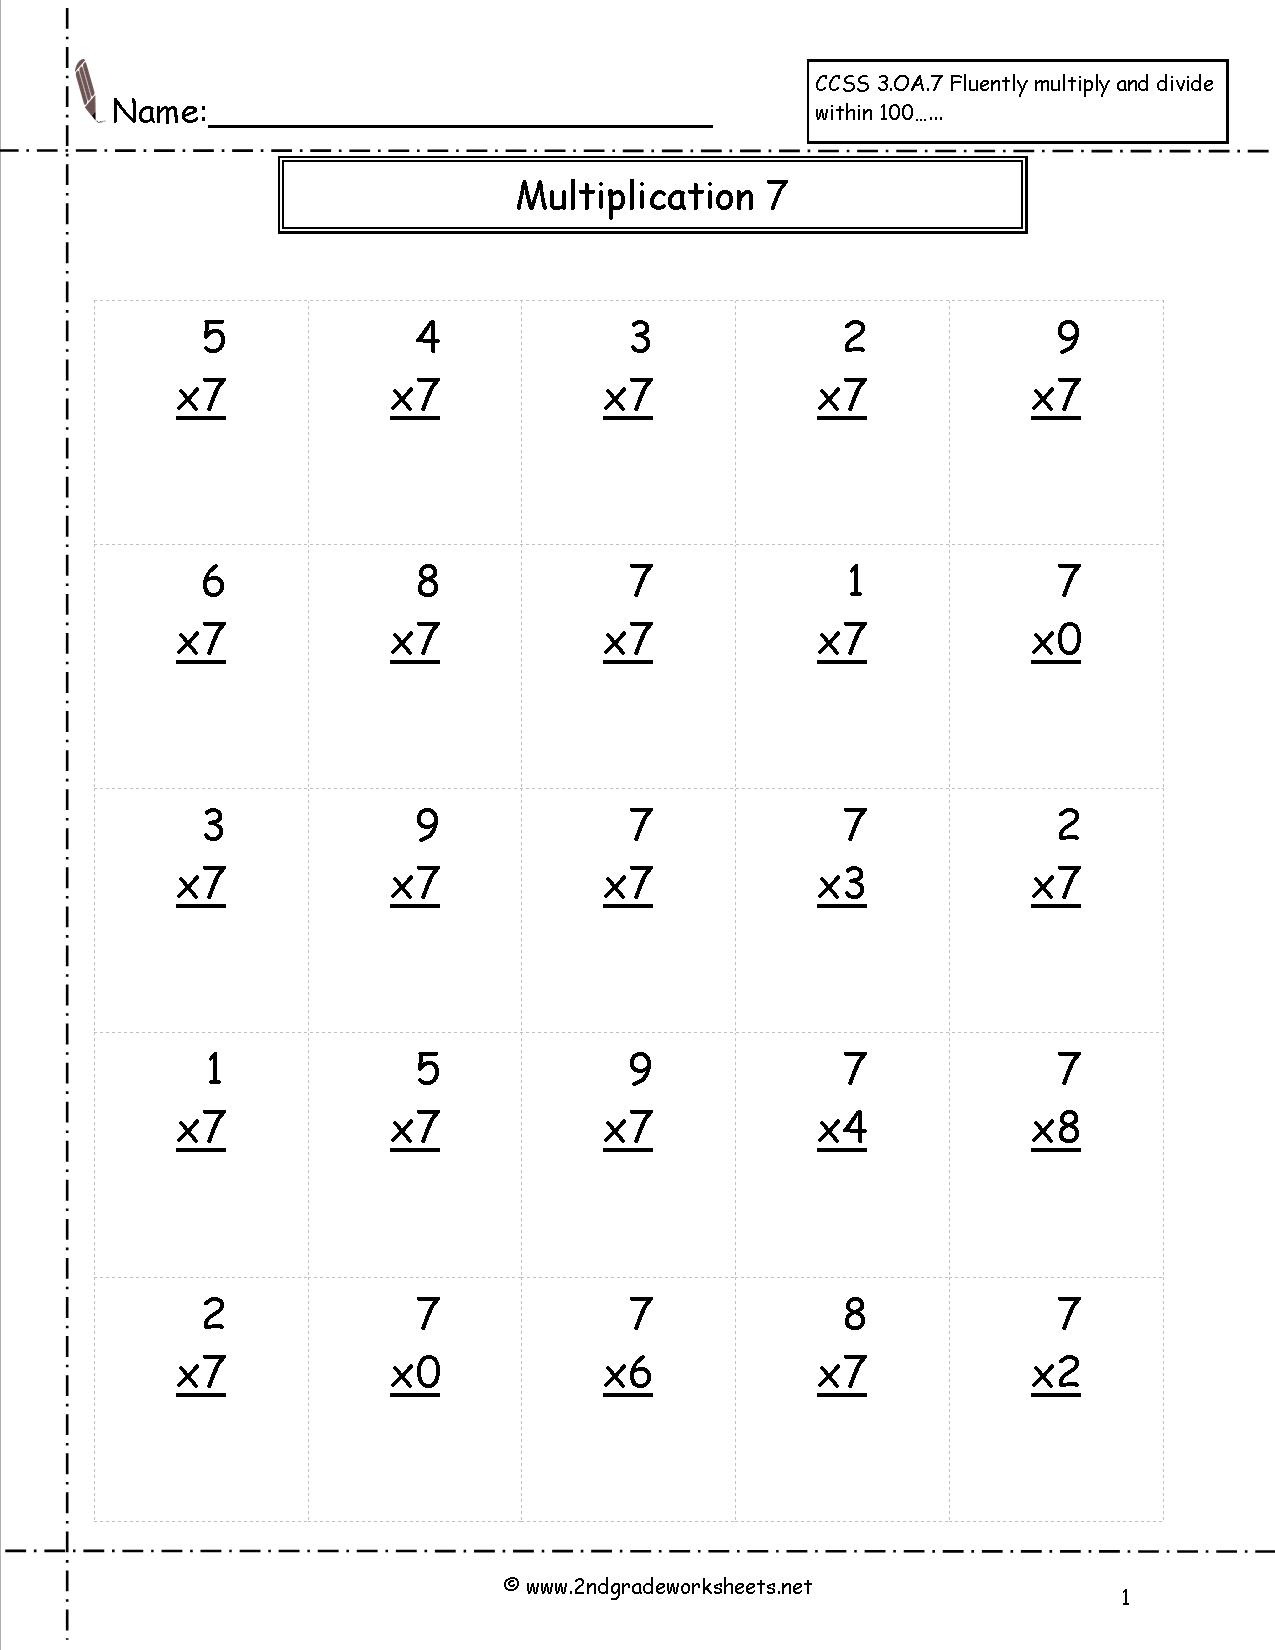 Multiplication Worksheets 2Nd Grade Ntables Free Ntable Back pertaining to Multiplication Worksheets 50 Problems